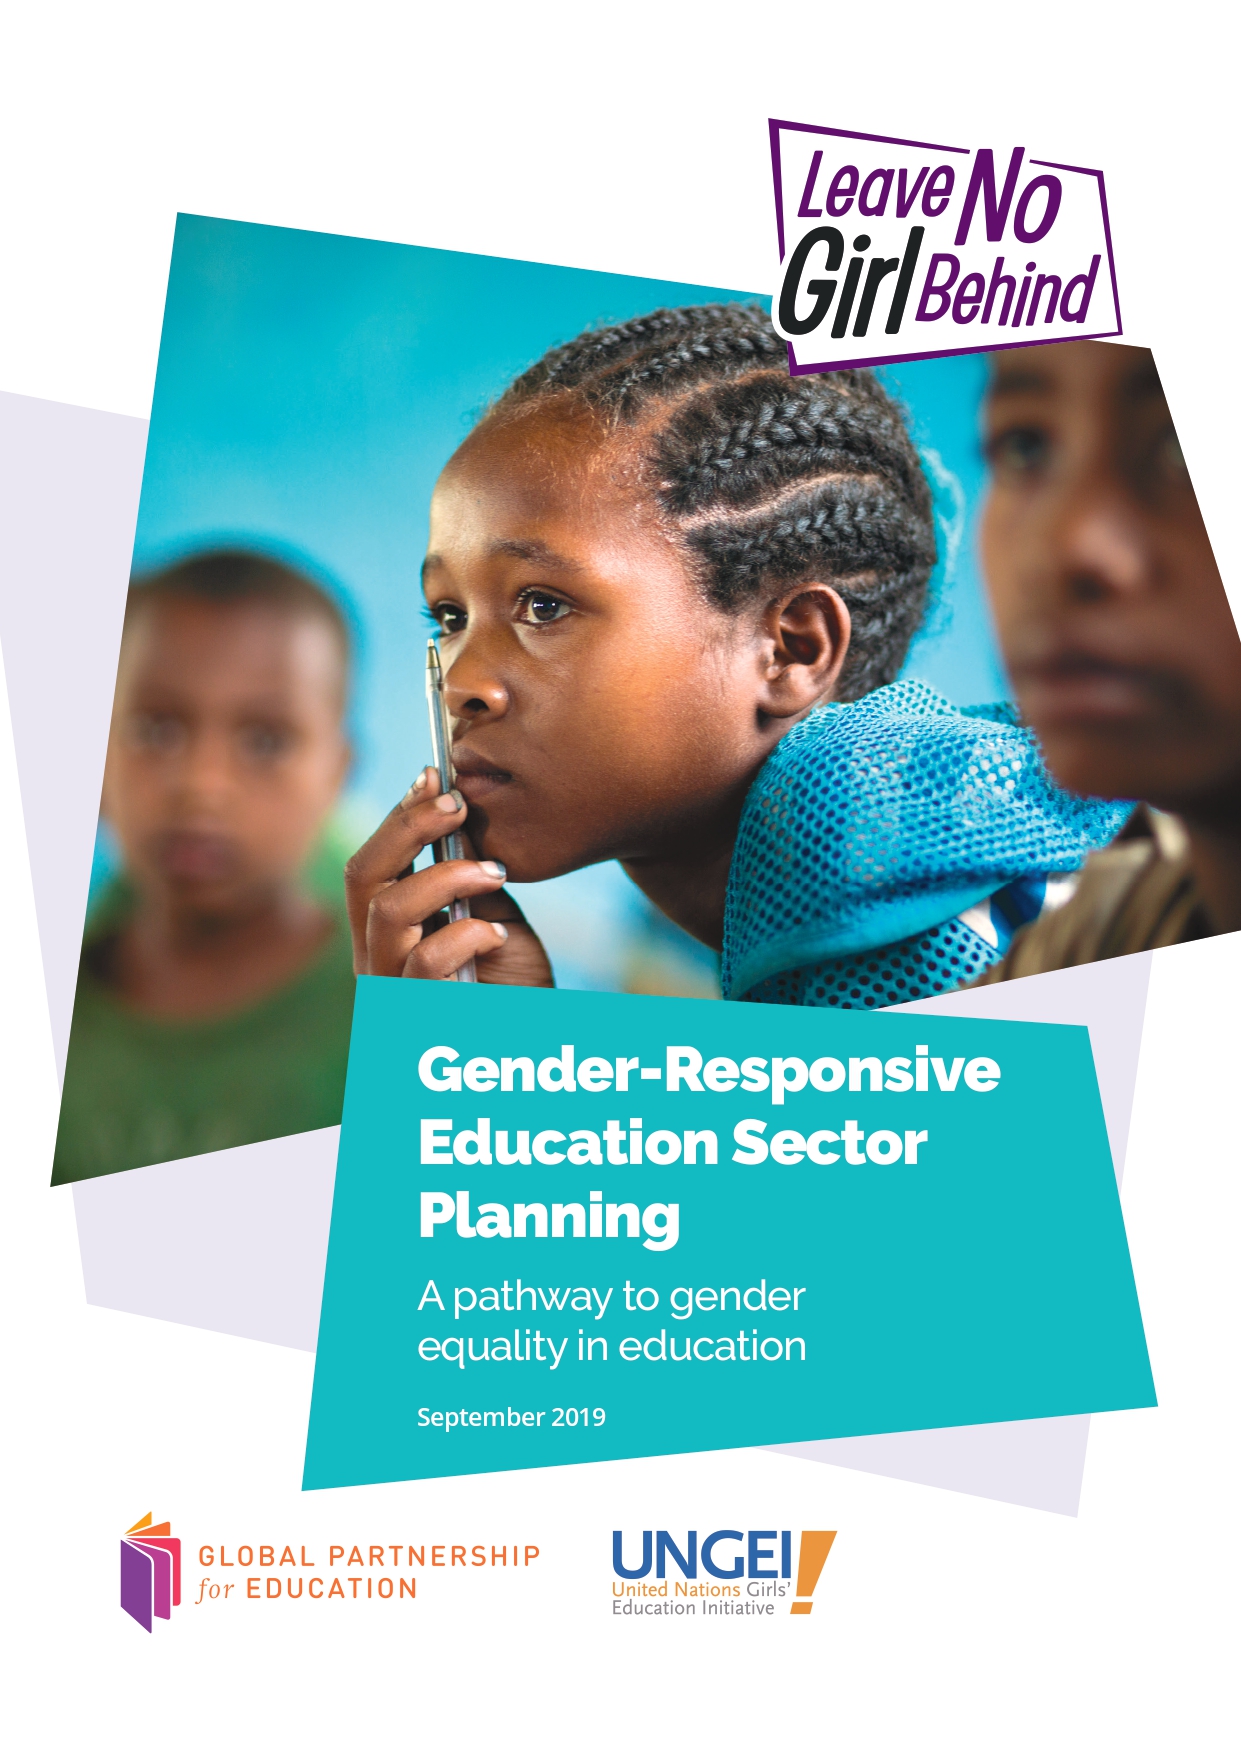 Gender-responsive education sector planning